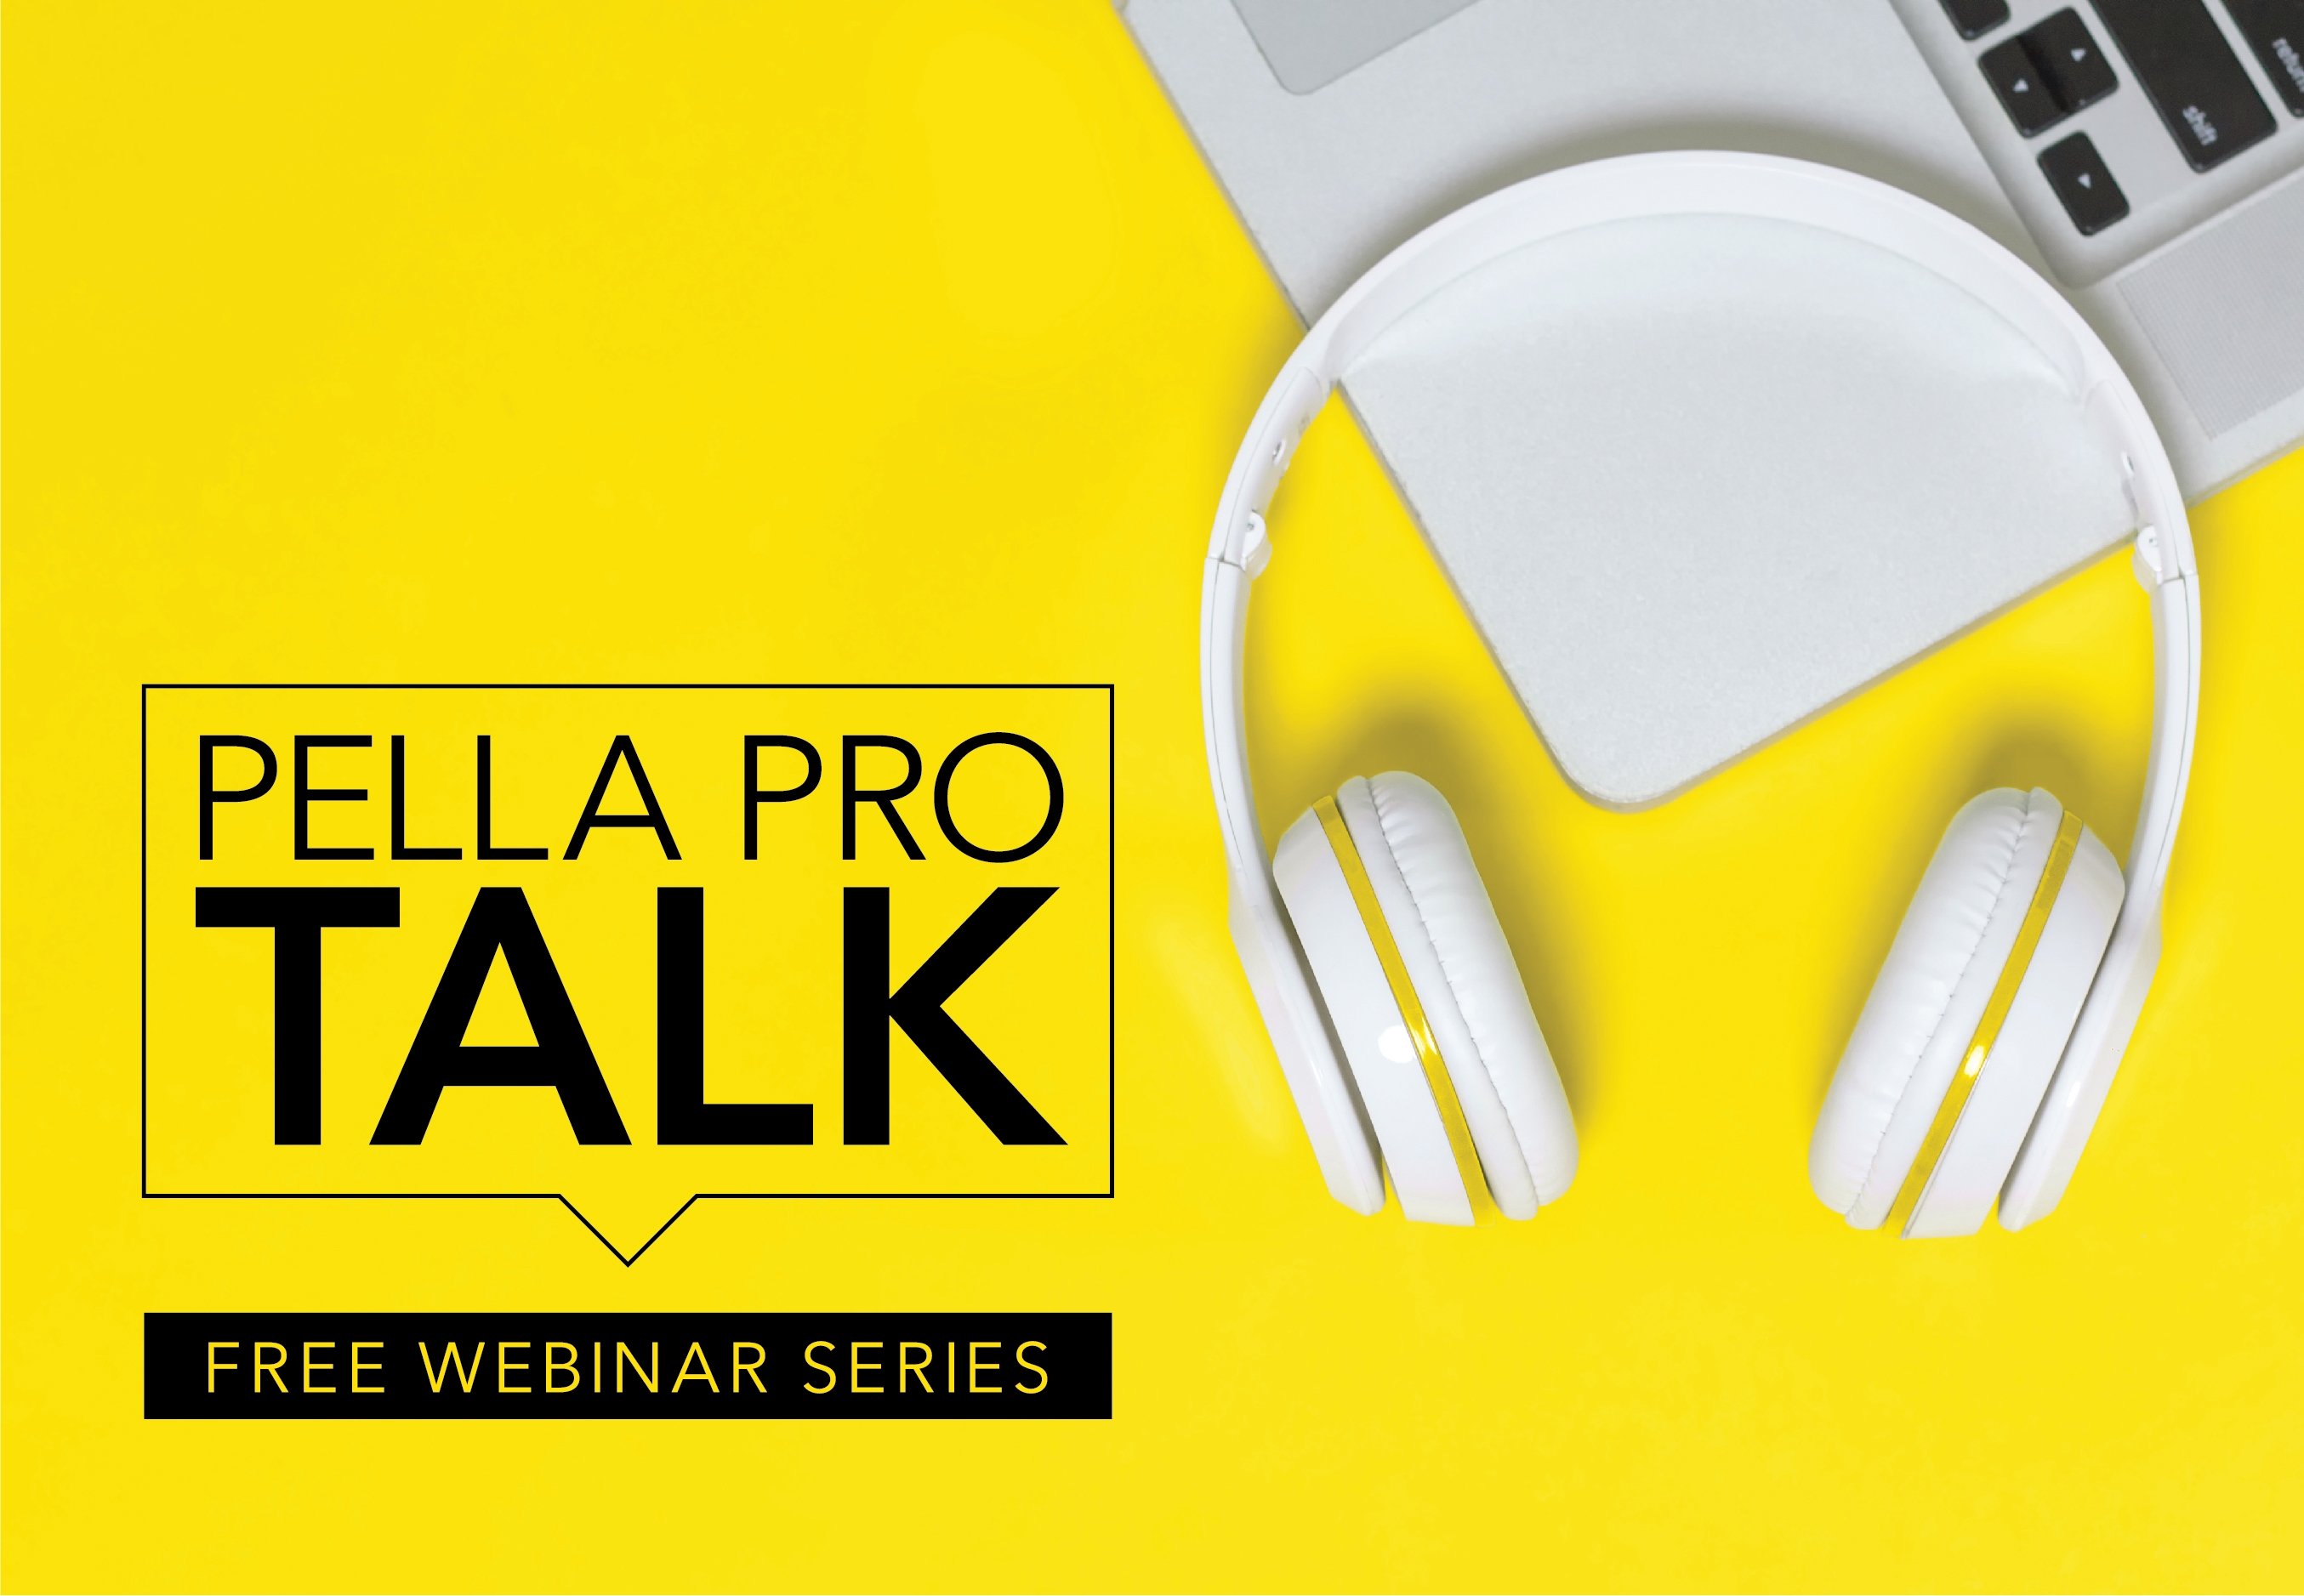 Pella Pro talk webinar series